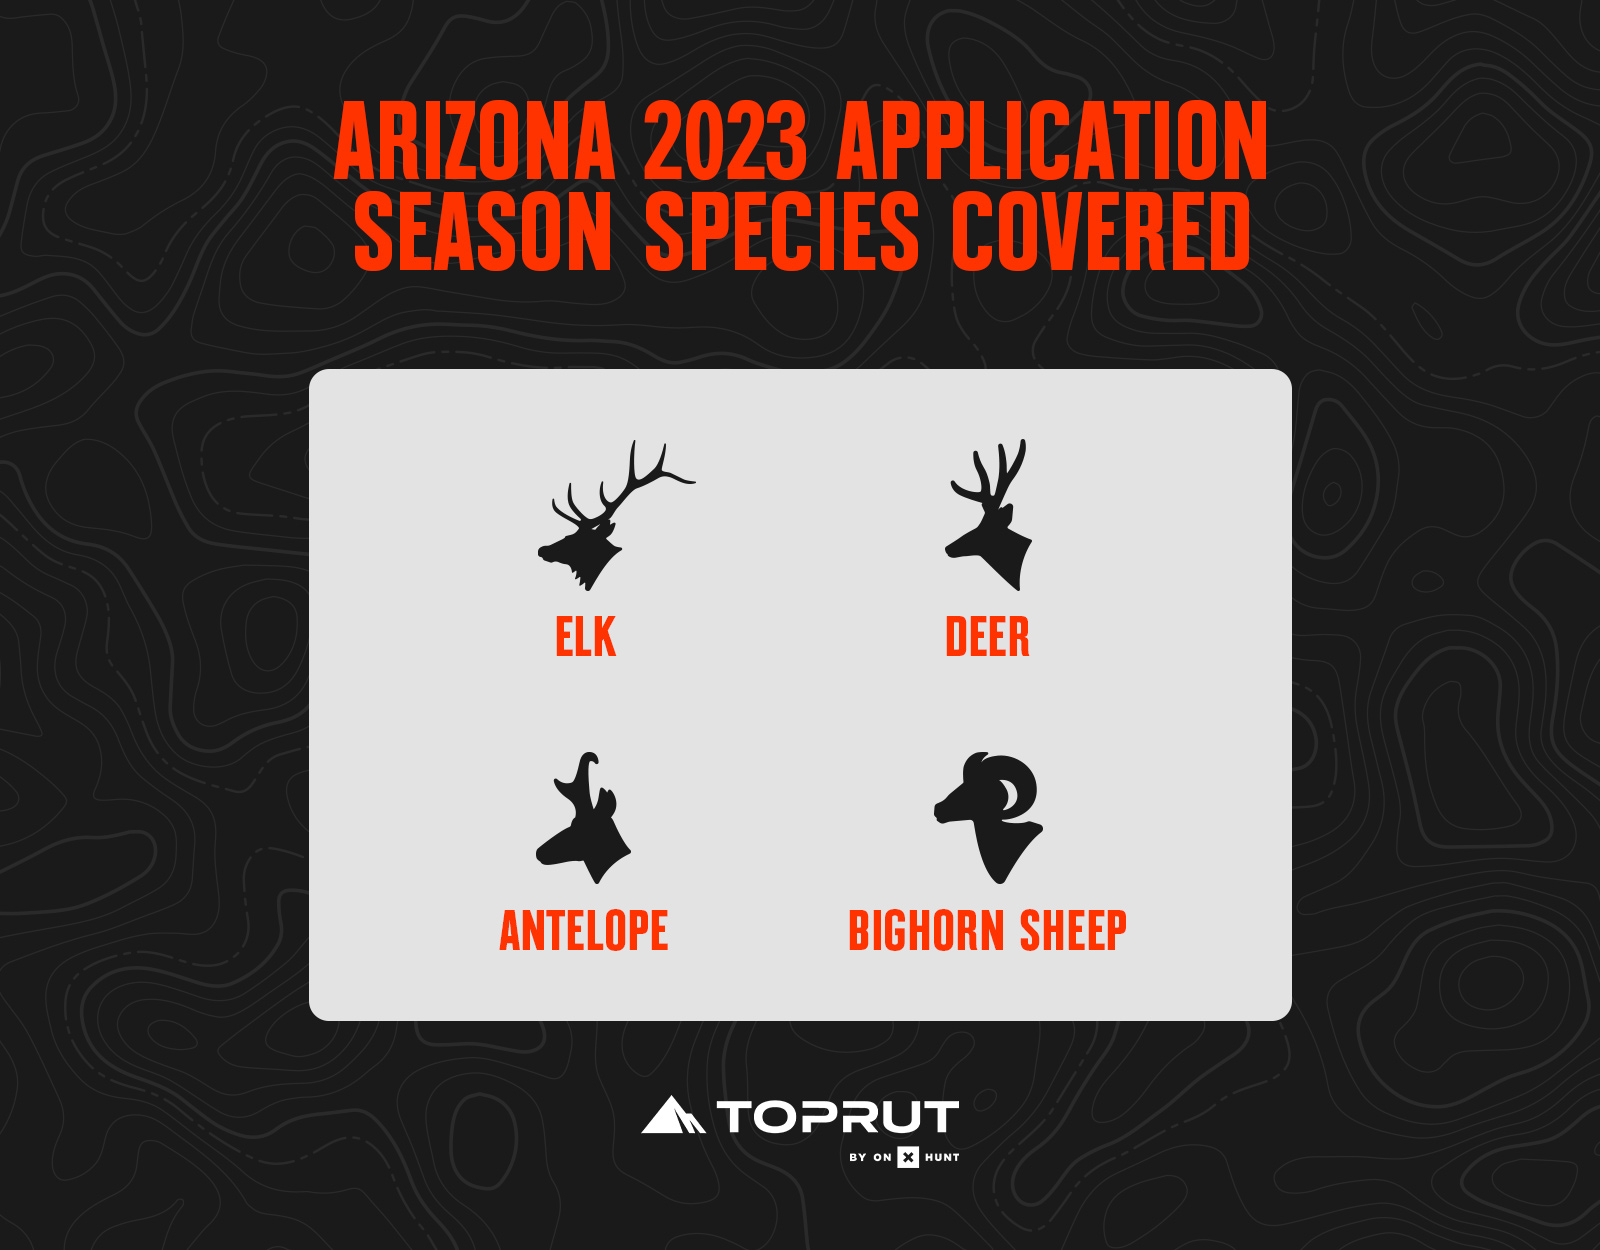 Arizona hunting application species for 2023 - elk, deer, antelope and bighorn sheep